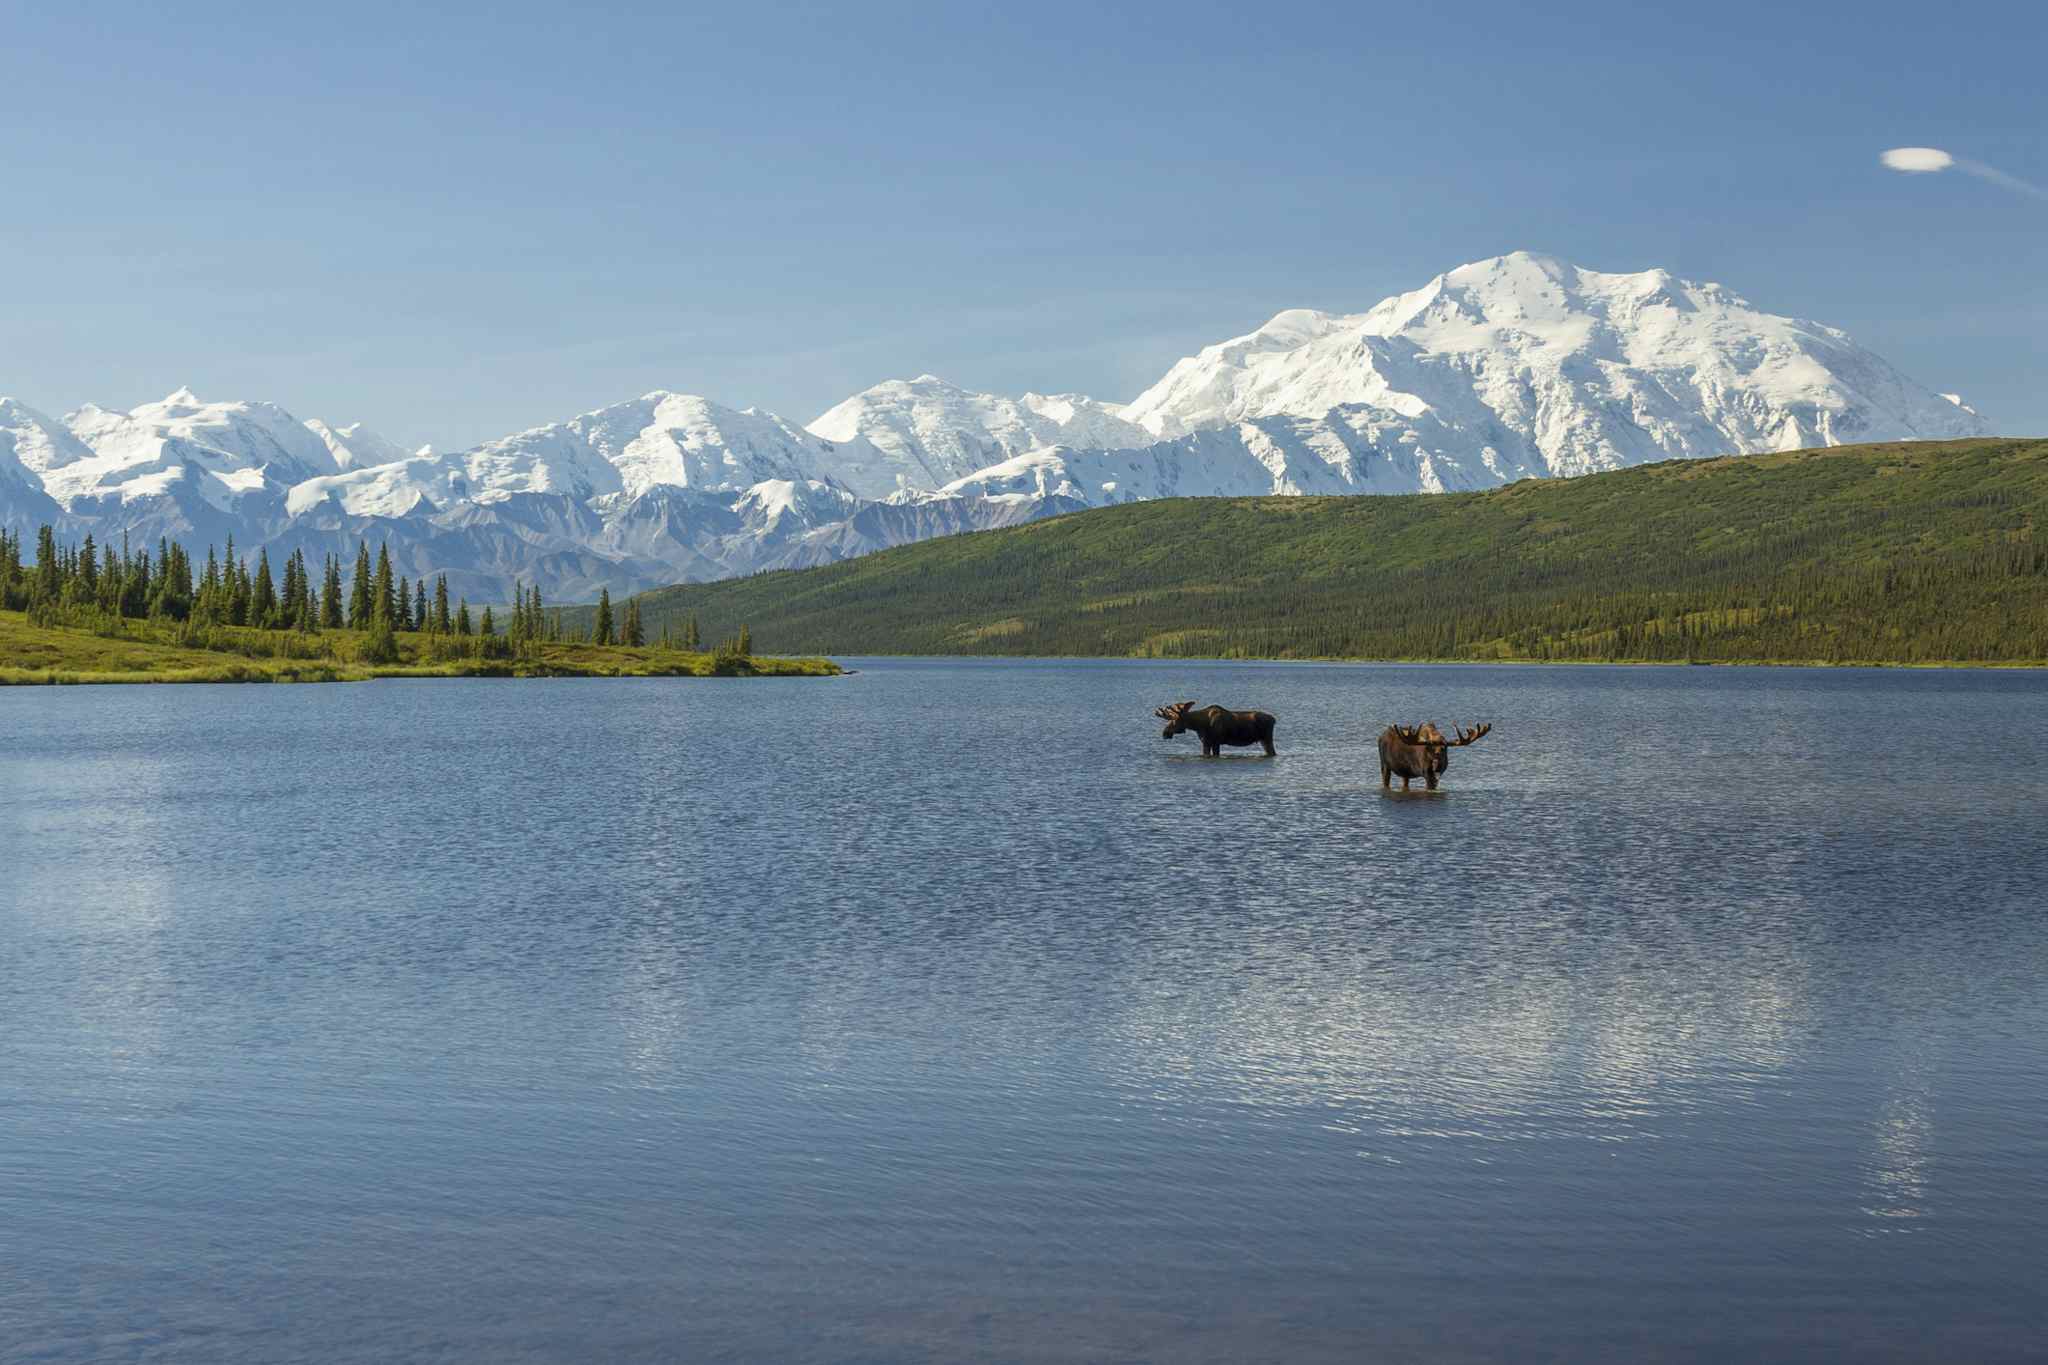 Two bull moose feeding in Wonder Lake with the Alaska Range in the background, Denali National Park, Alaska.
Getty: 628618916
